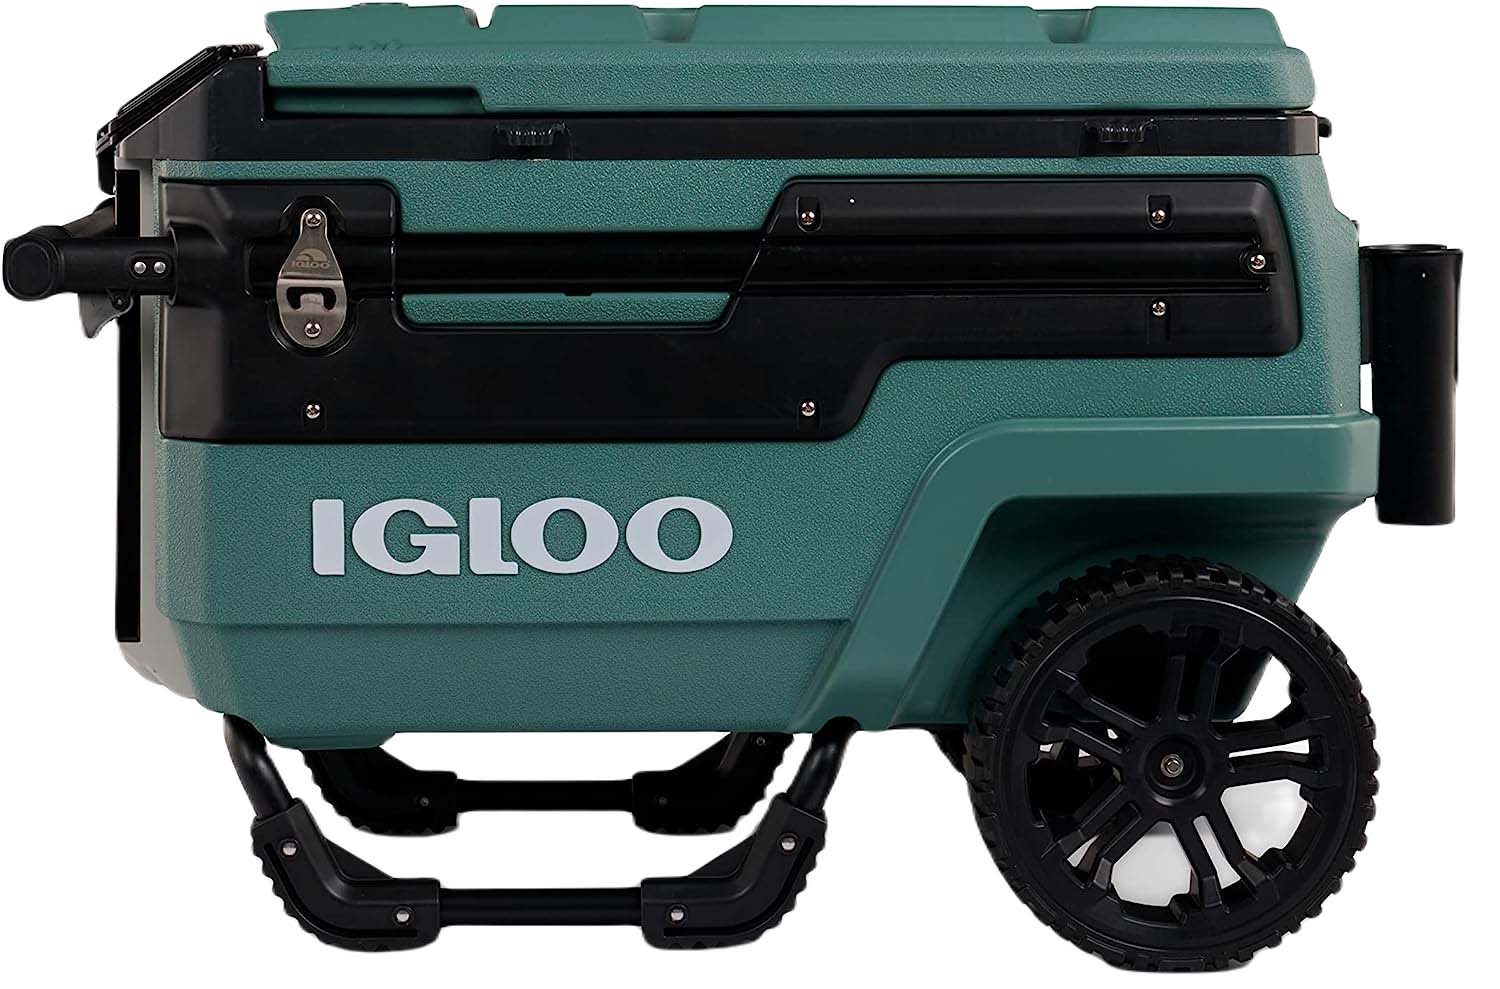 Wheeled cooler (Igloo Trailmate Journey)